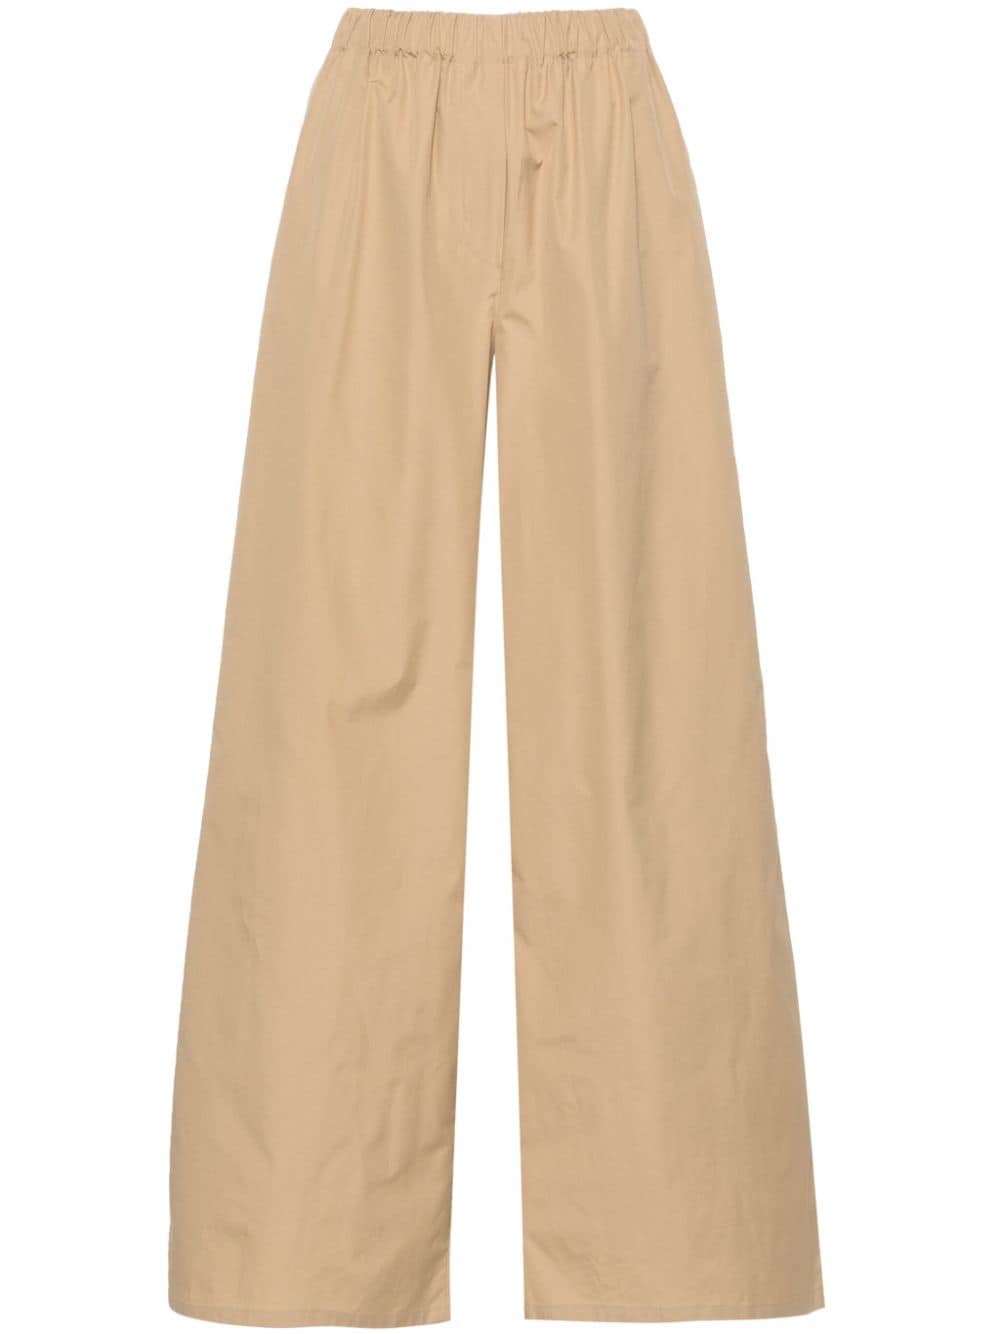 Wide-leg cotton trousers<BR/><BR/><BR/>